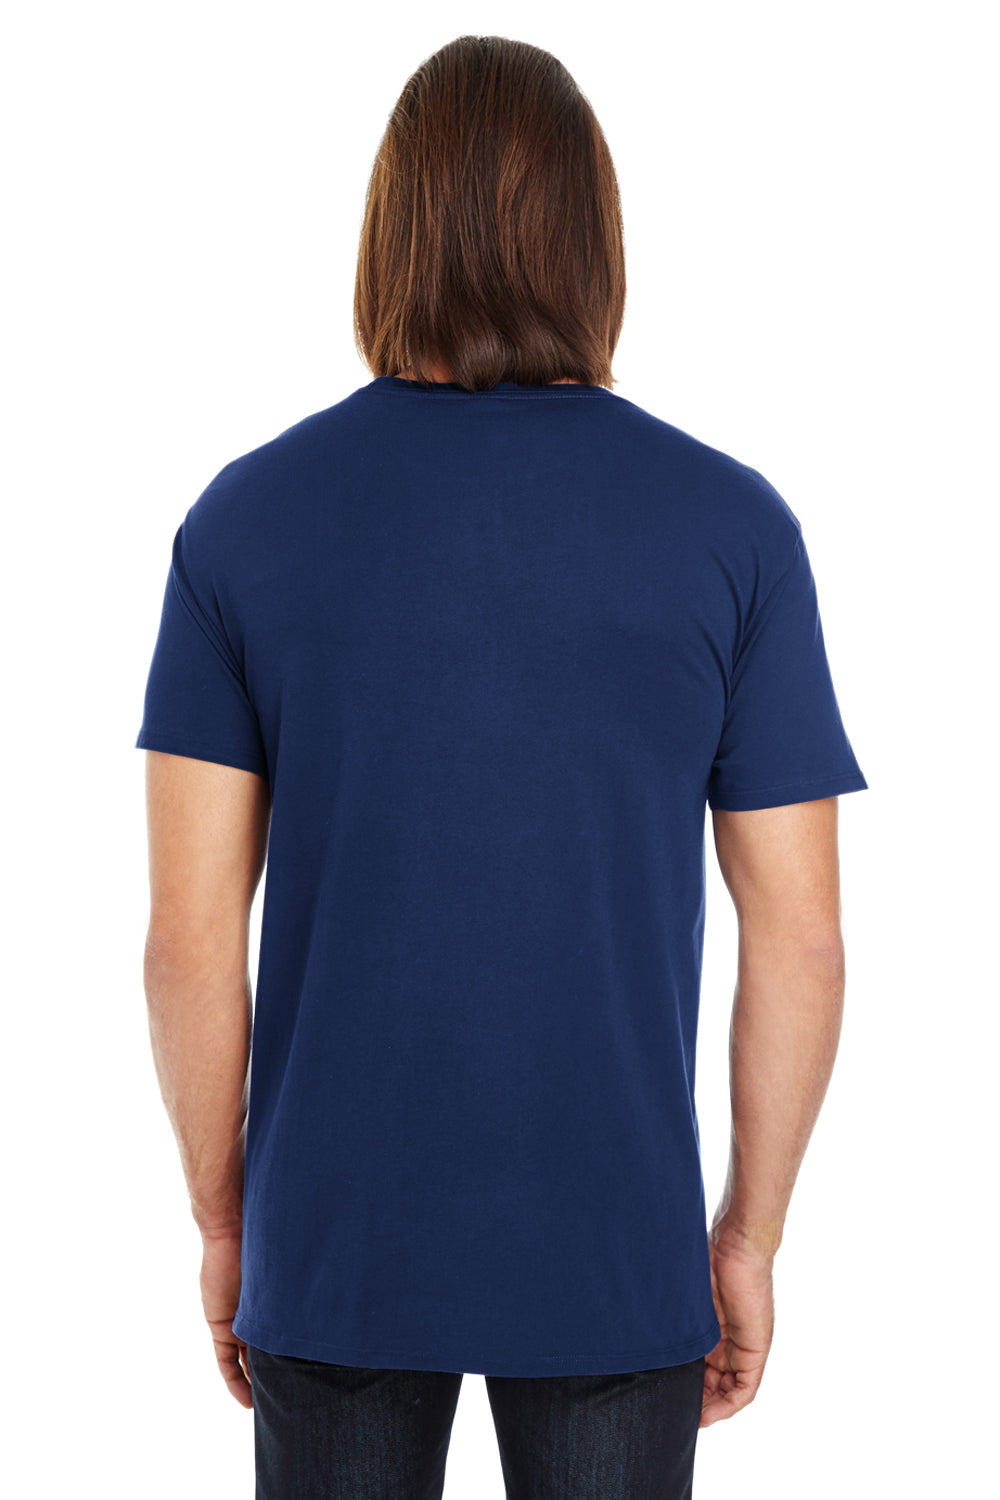 Threadfast Apparel 130A Mens Short Sleeve Crewneck T-Shirt Navy Blue Back